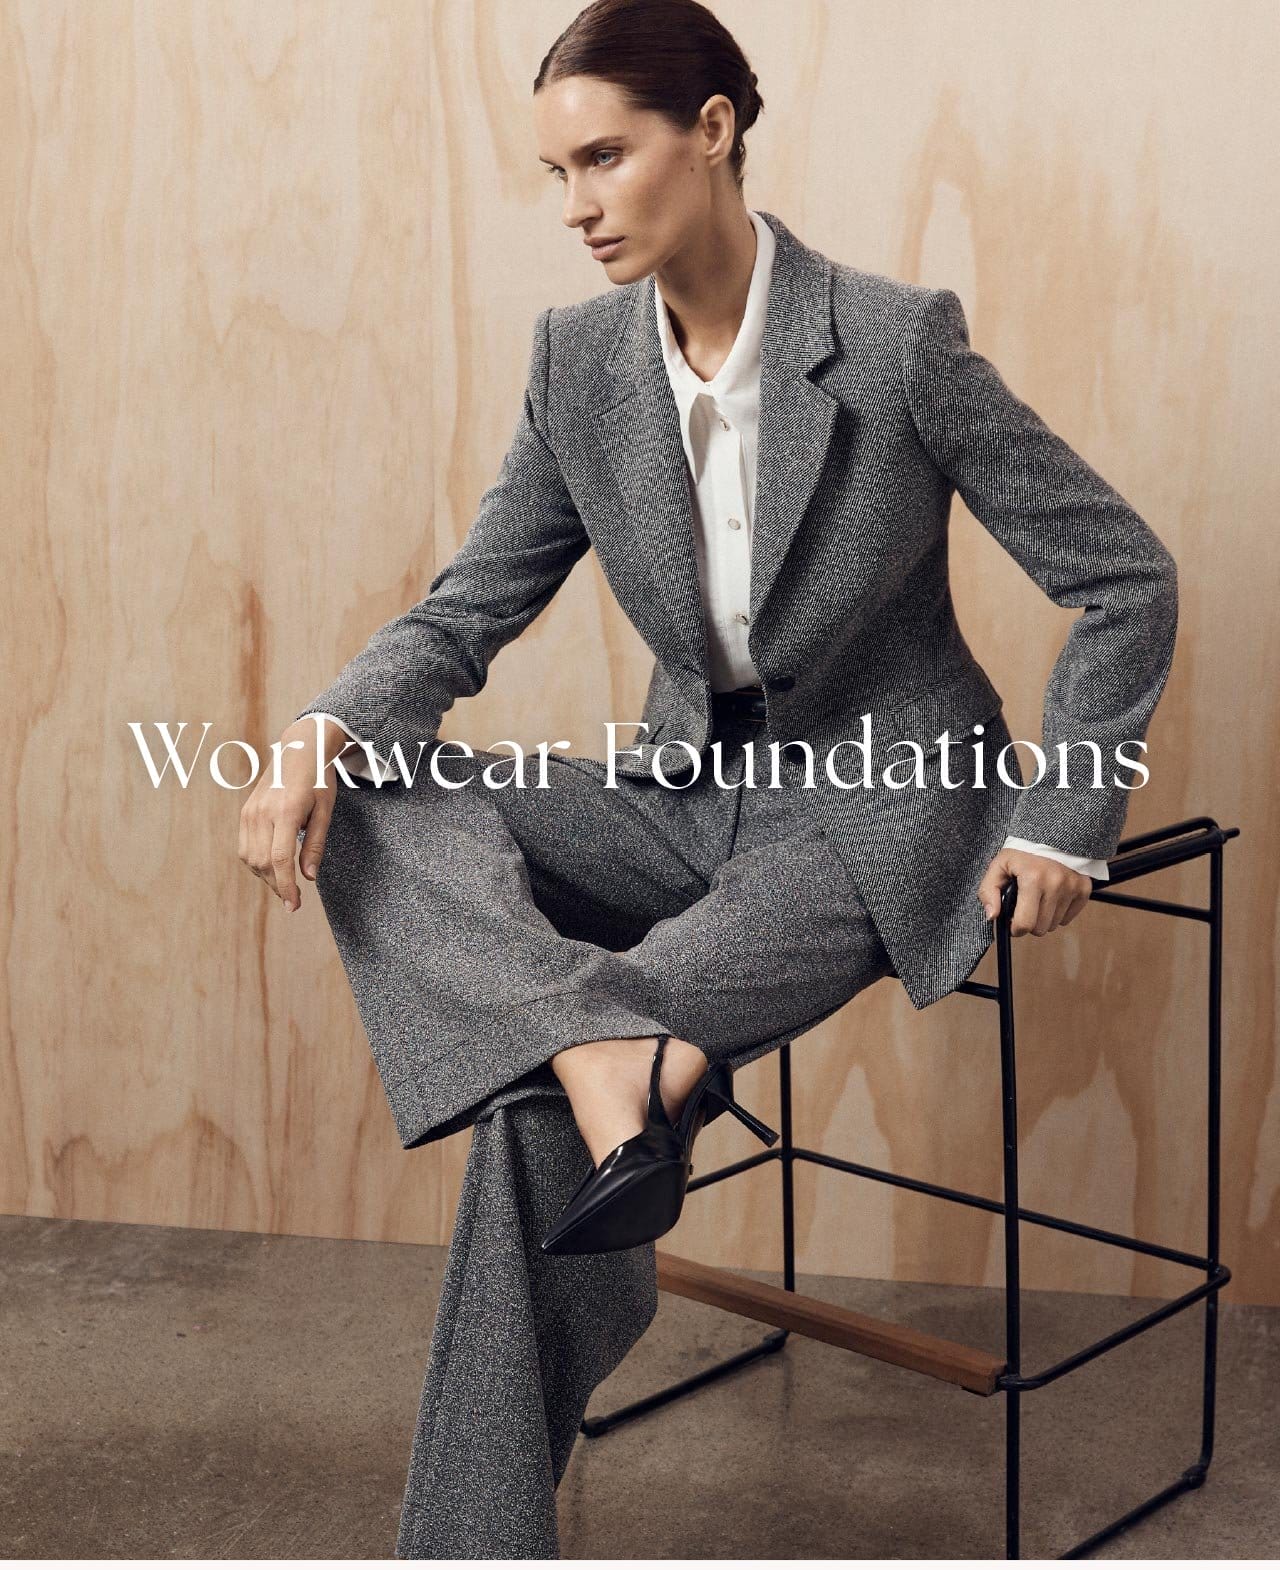 Workwear Foundations